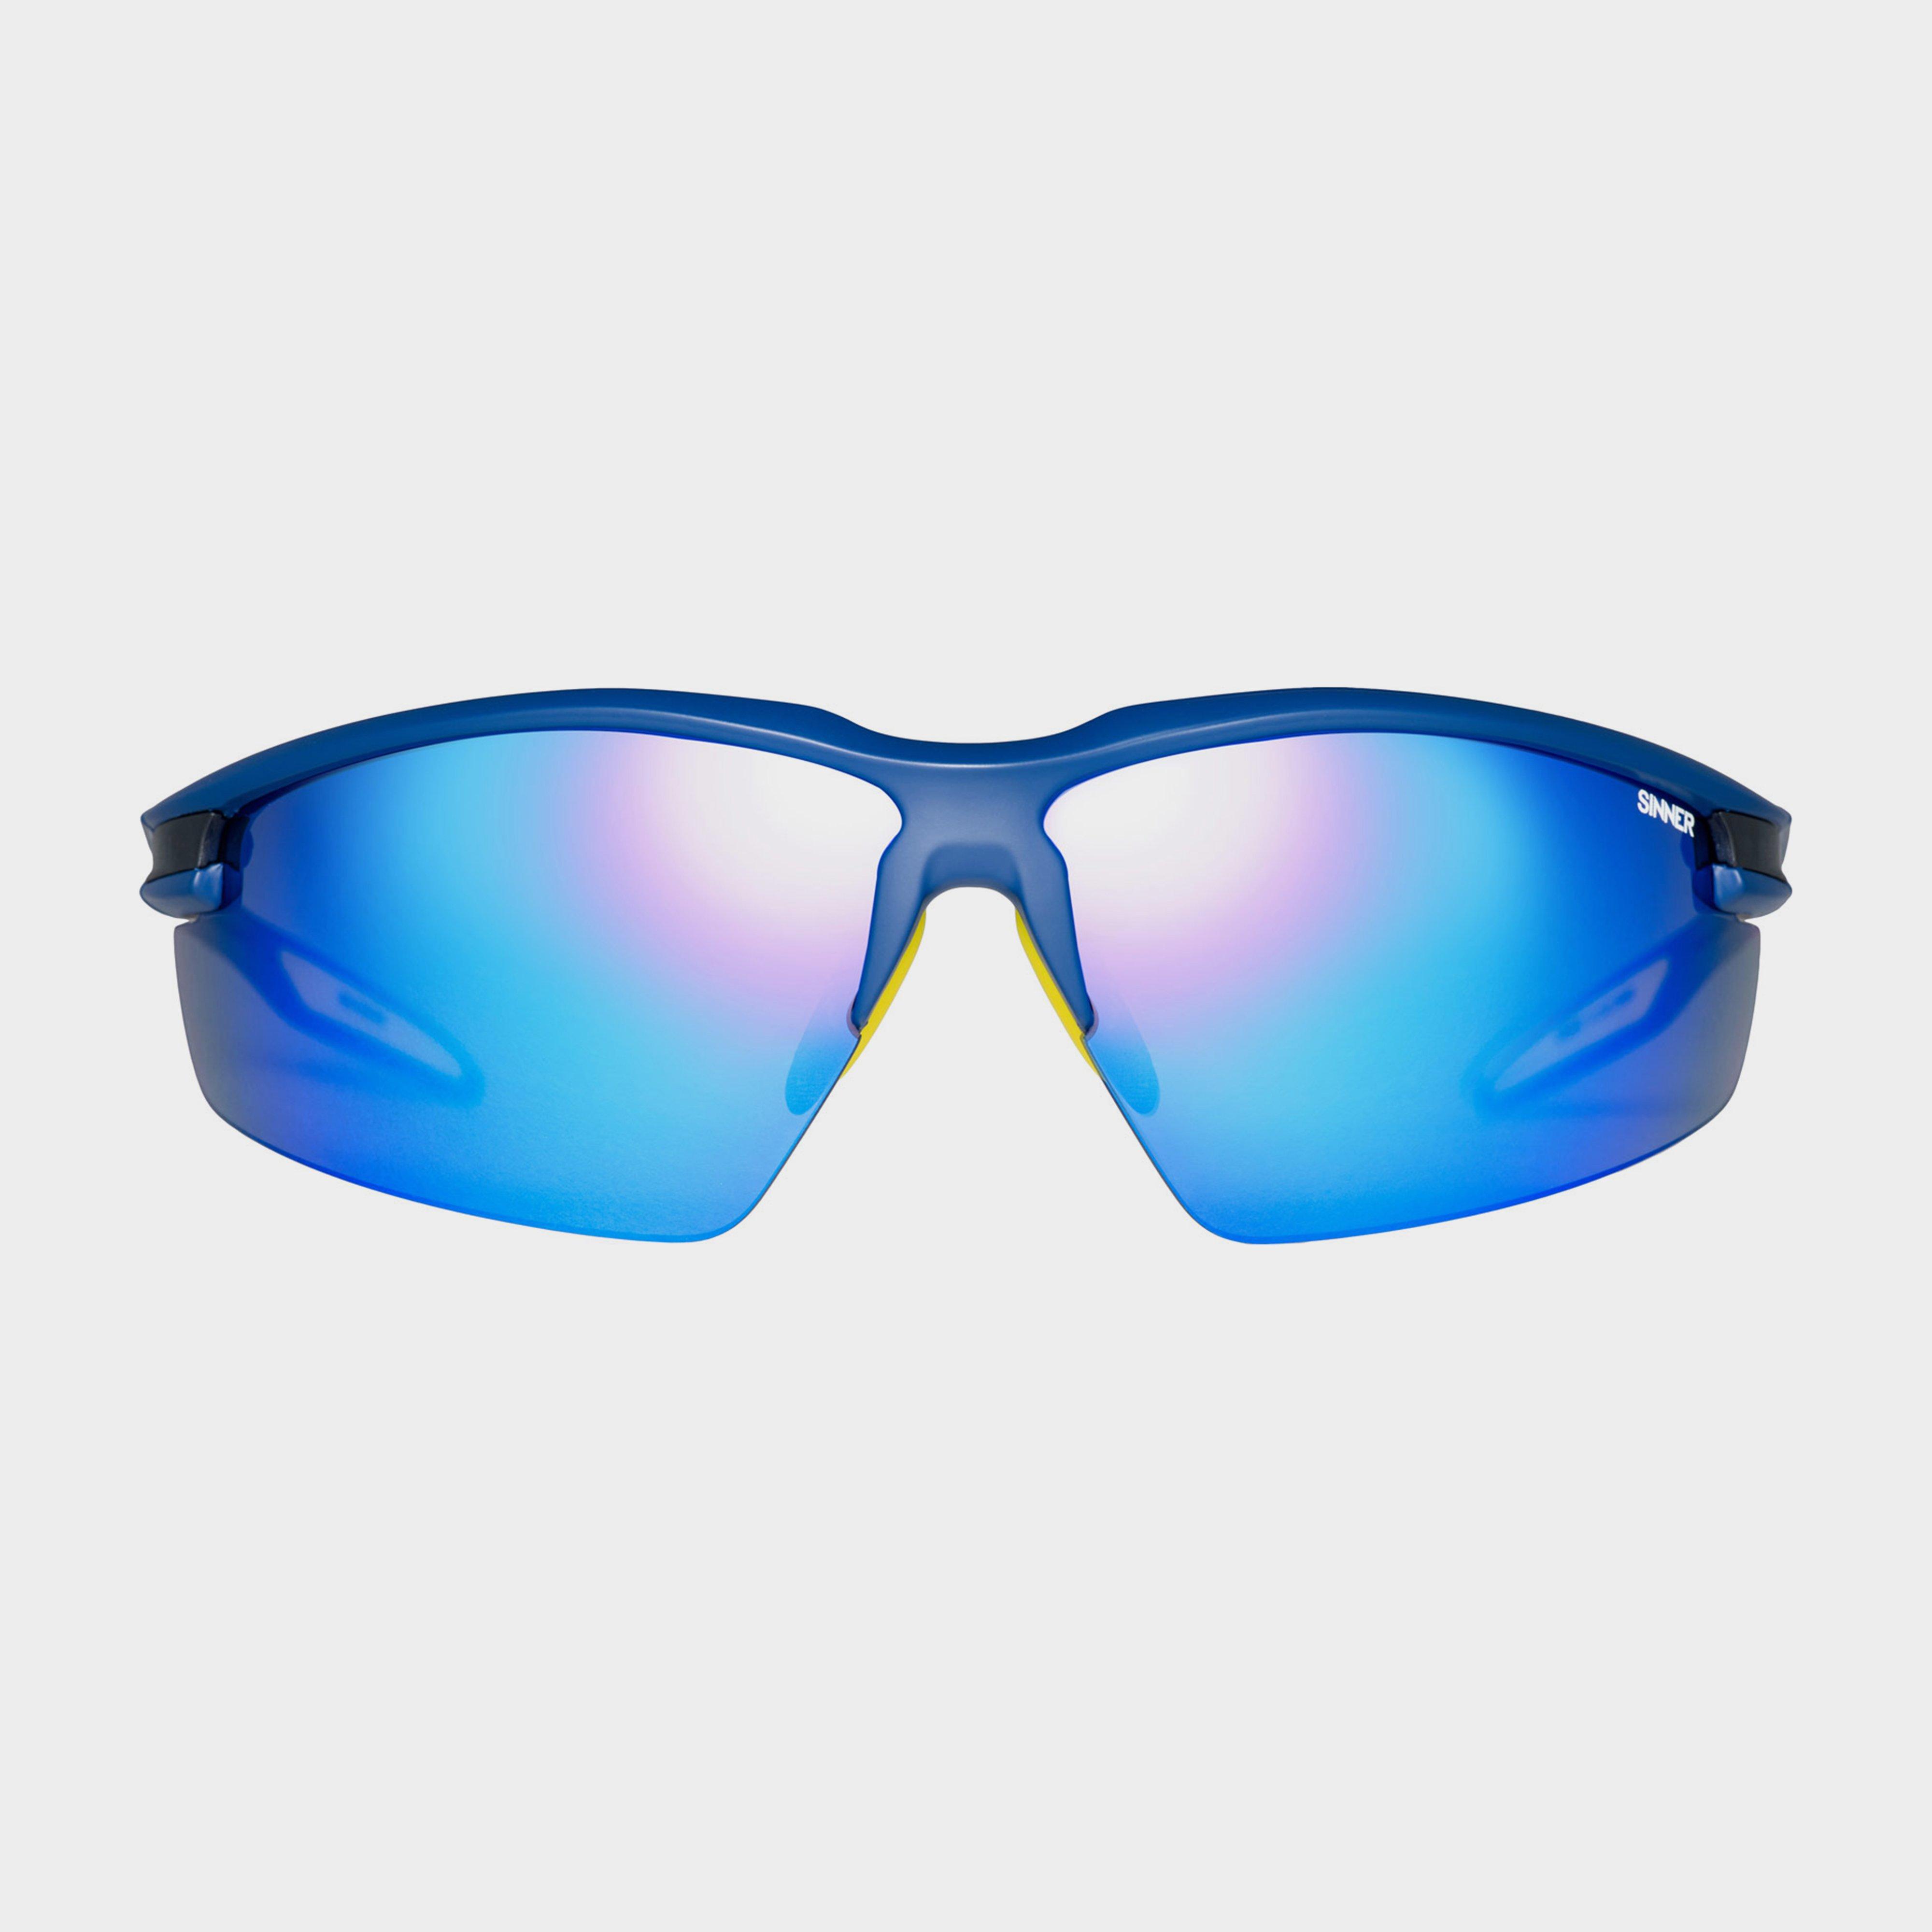 Sinner Granite Sunglasses (PC Blue Revo) Review